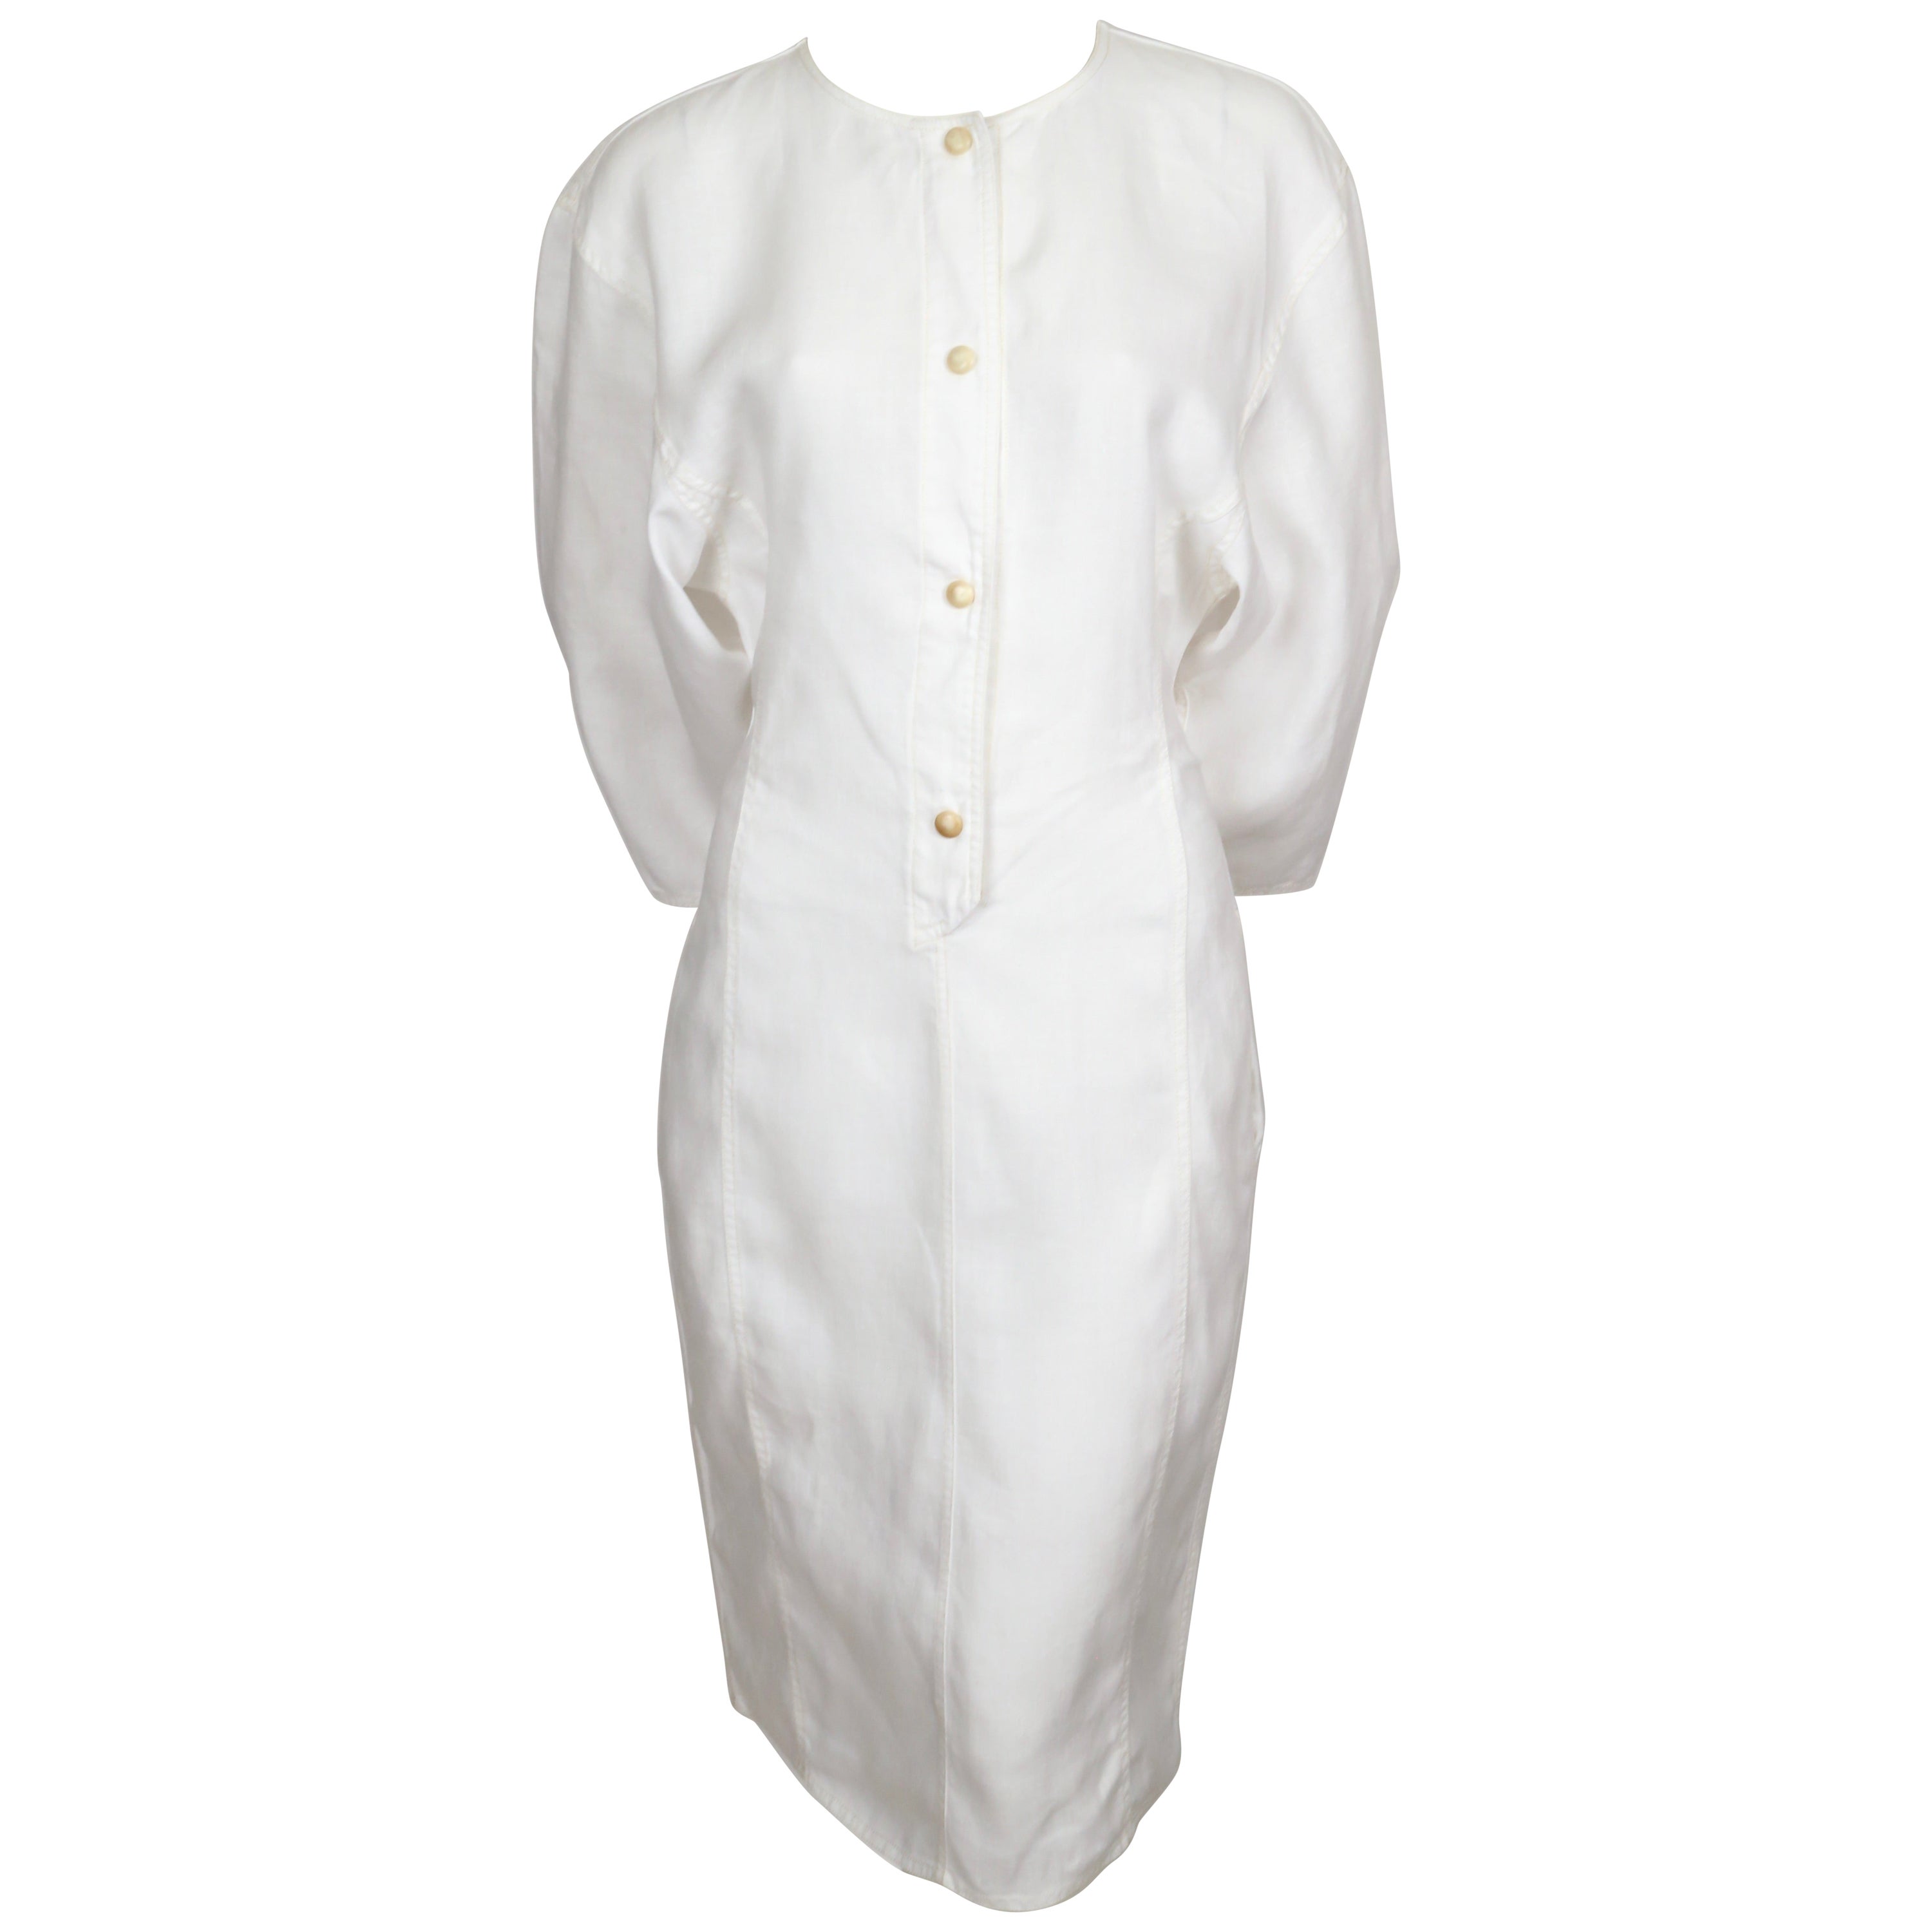 1980's ANNE MARIE BERETTA white linen dress For Sale